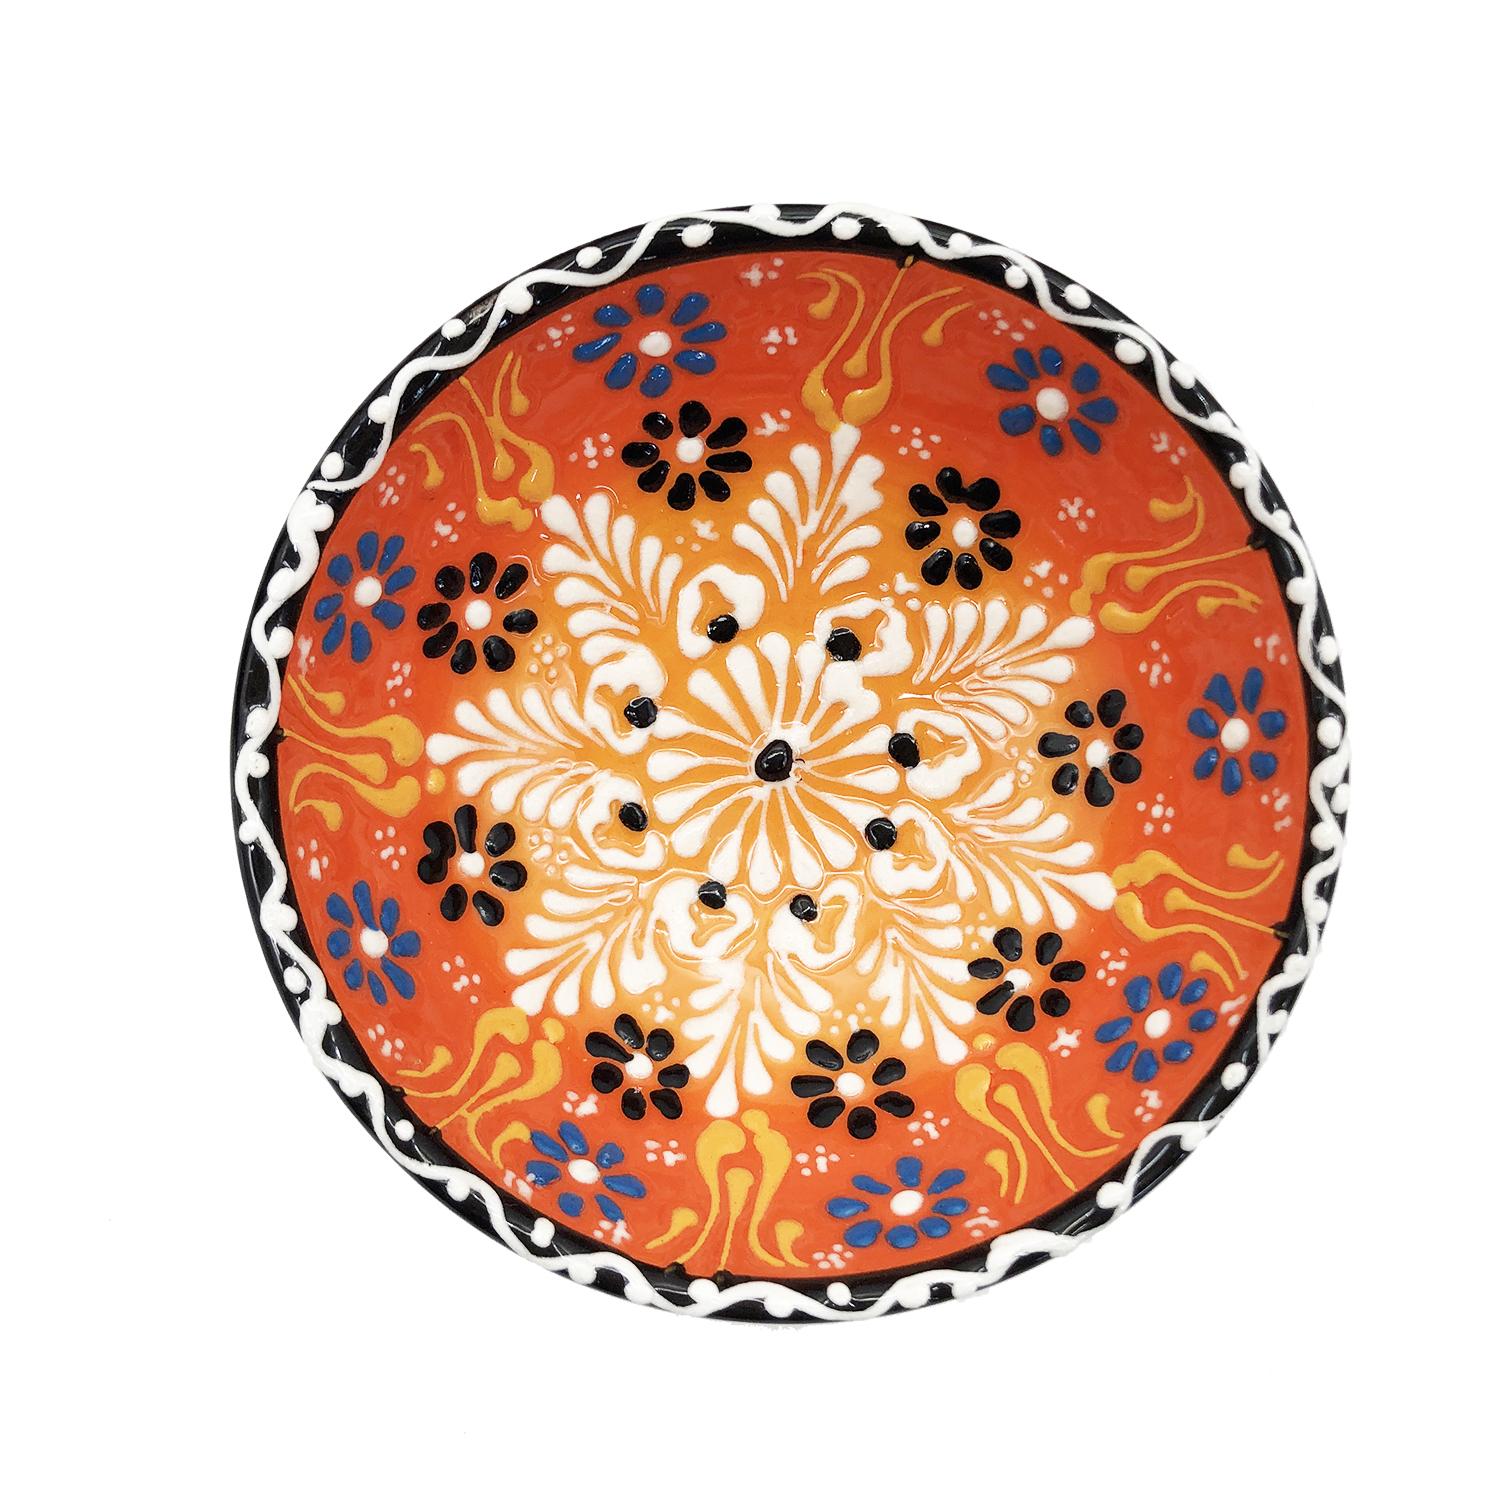 120MM手繪土耳其傳統工藝陶瓷碗， 土耳其餐具奧斯曼帝國浮雕圖案土耳其藝術時尚潮物(VTR-CERAMIC-BOWL-120MM-30105)